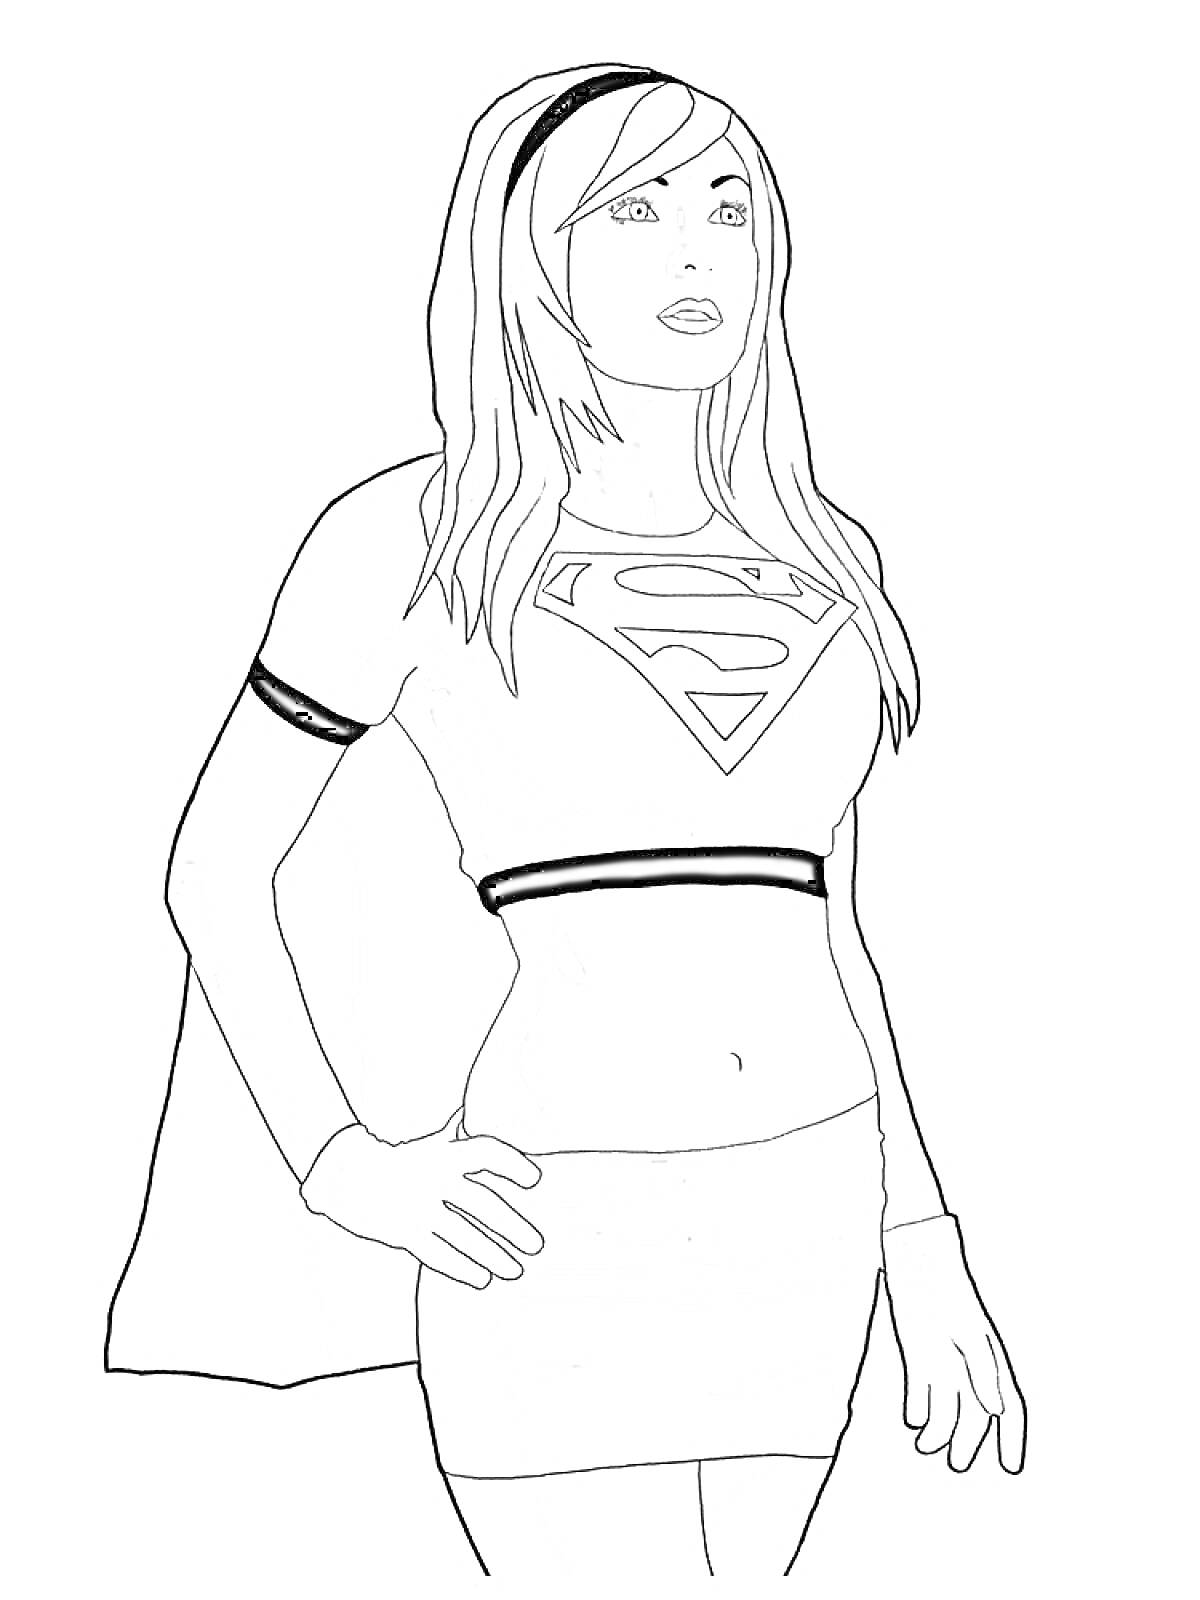 Раскраска Супергерл в костюме с плащом и логотипом на груди